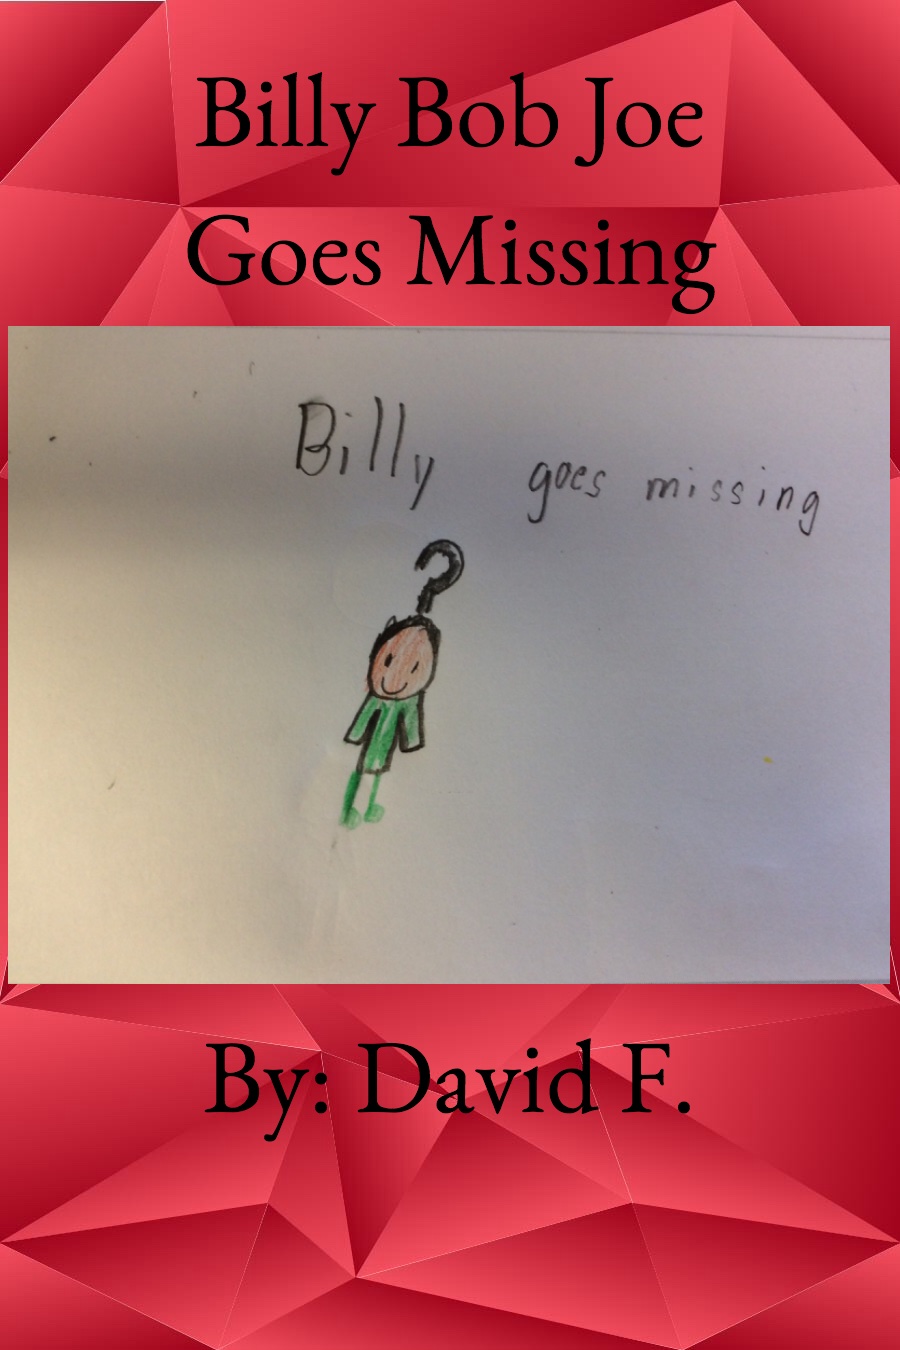 Billy bob joe goes missing by david f